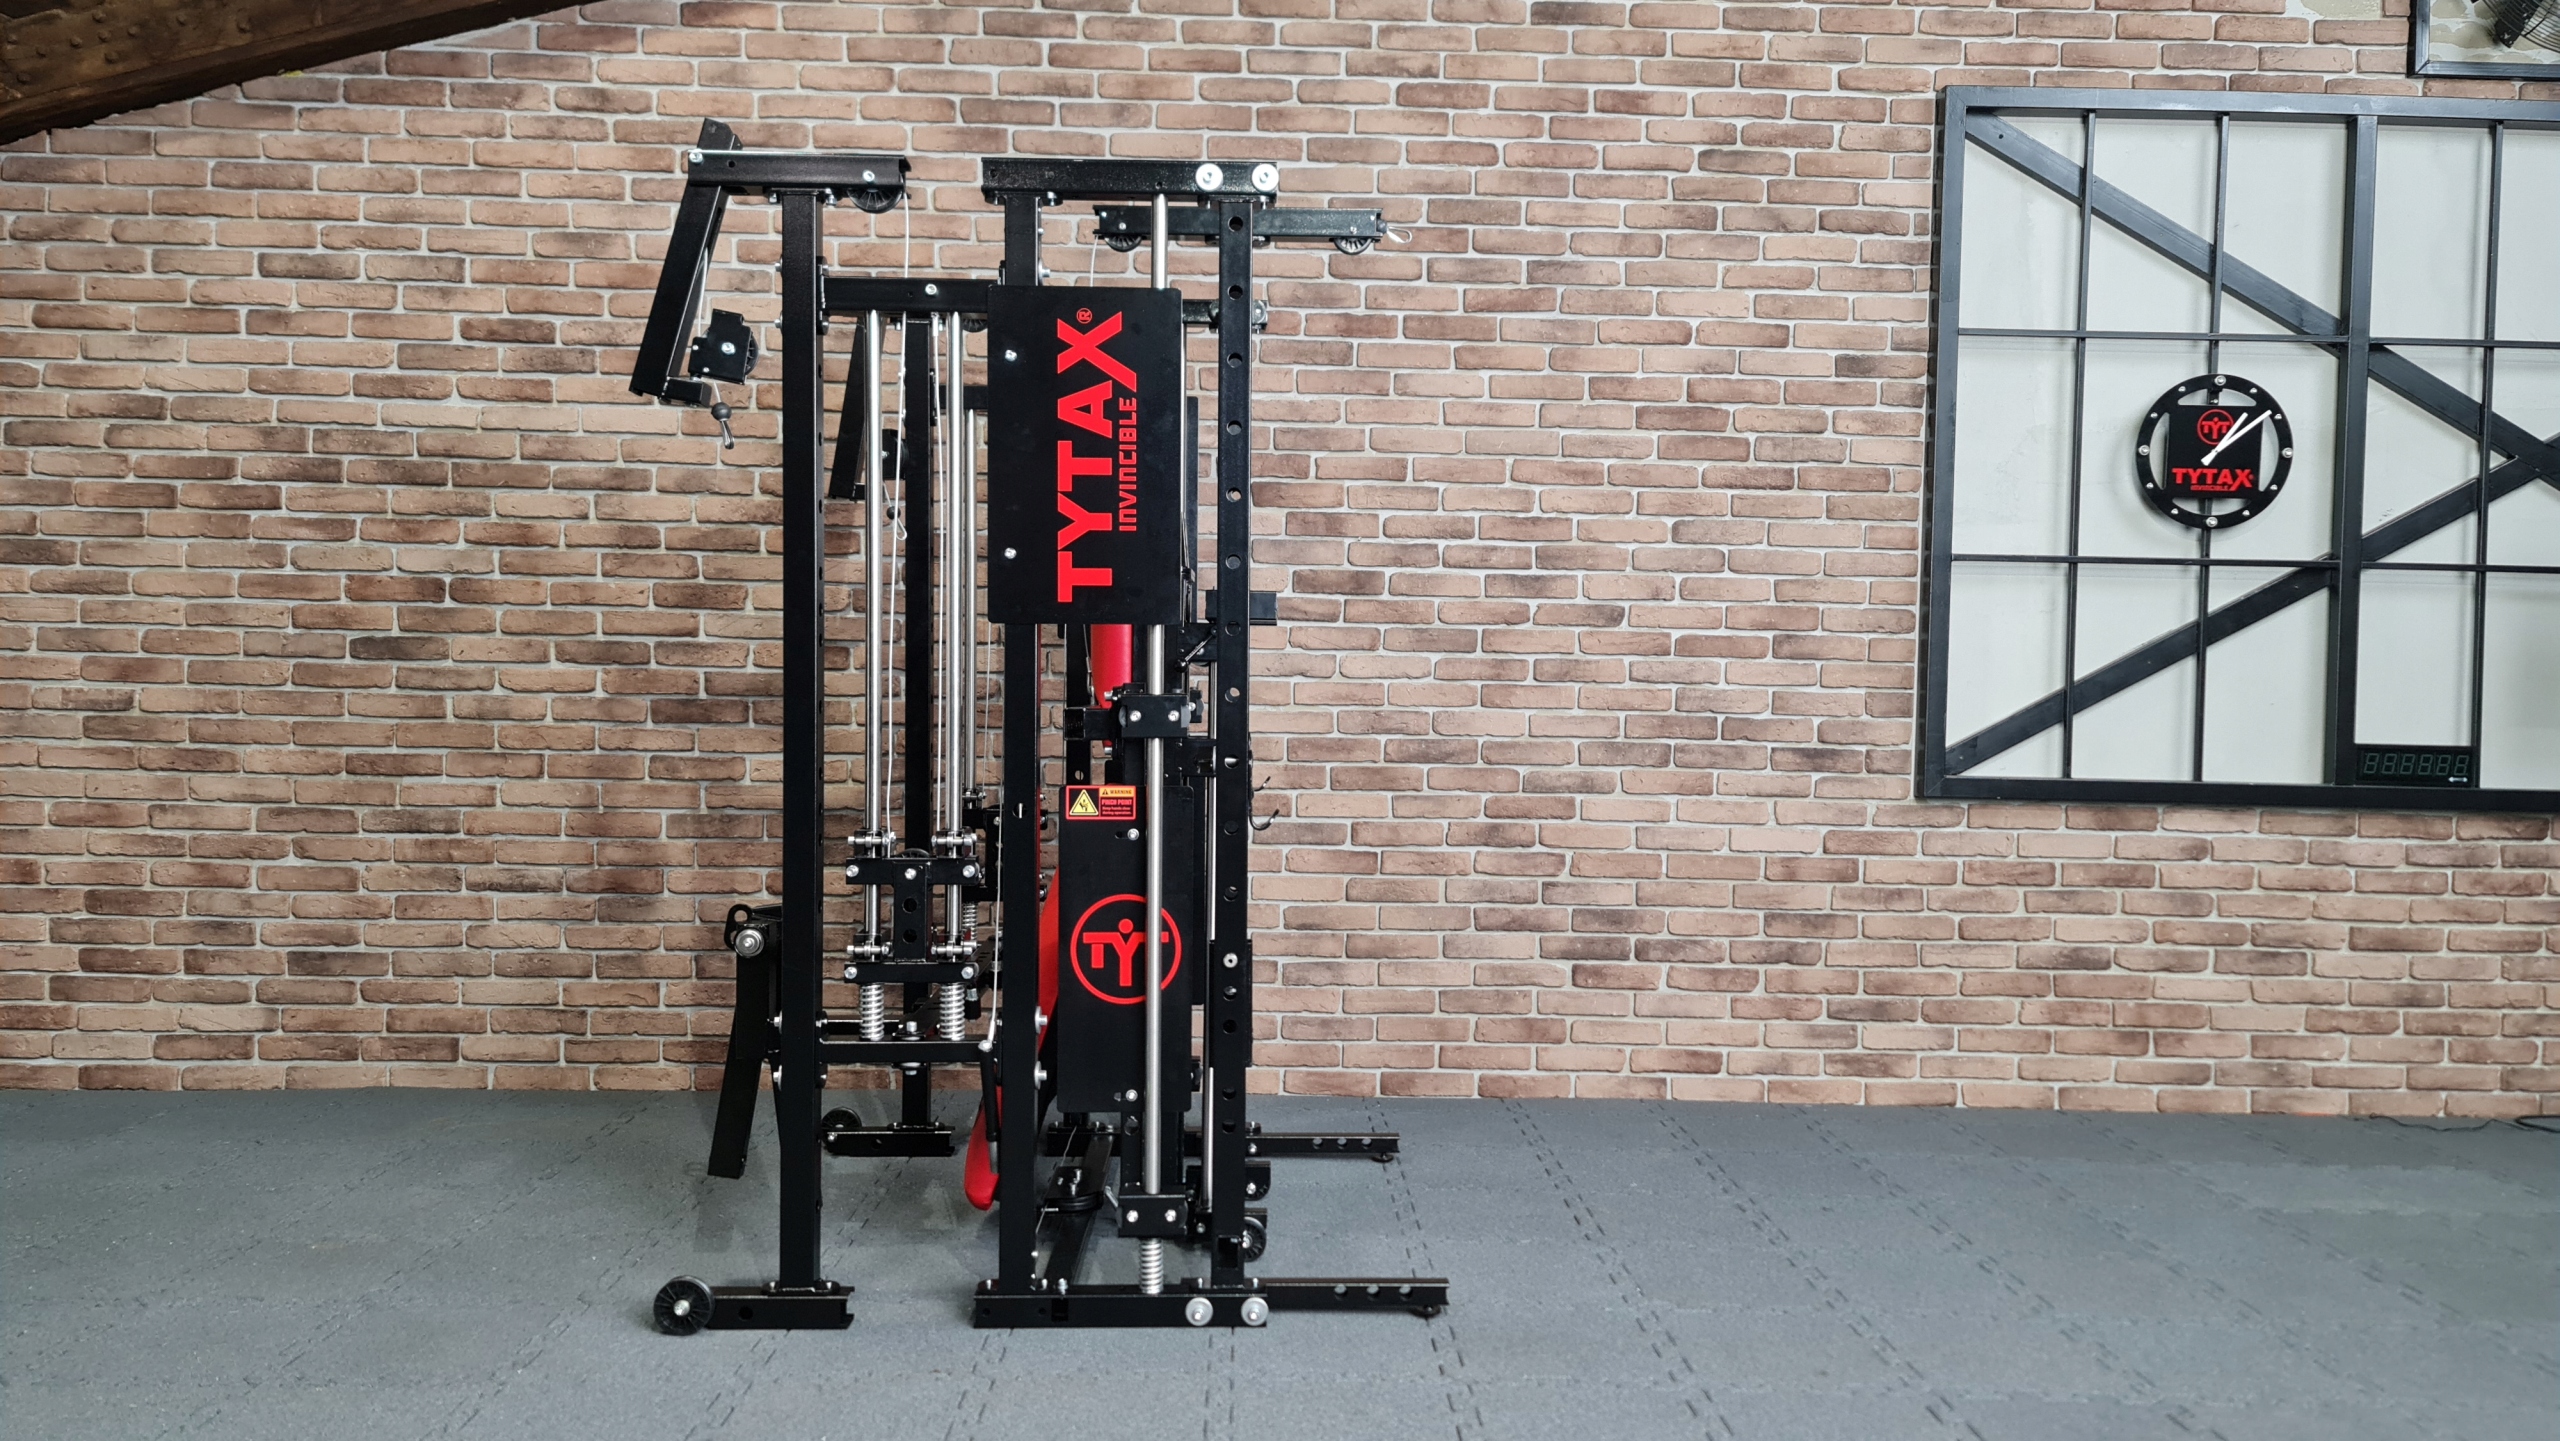 Tytax H9 Gym